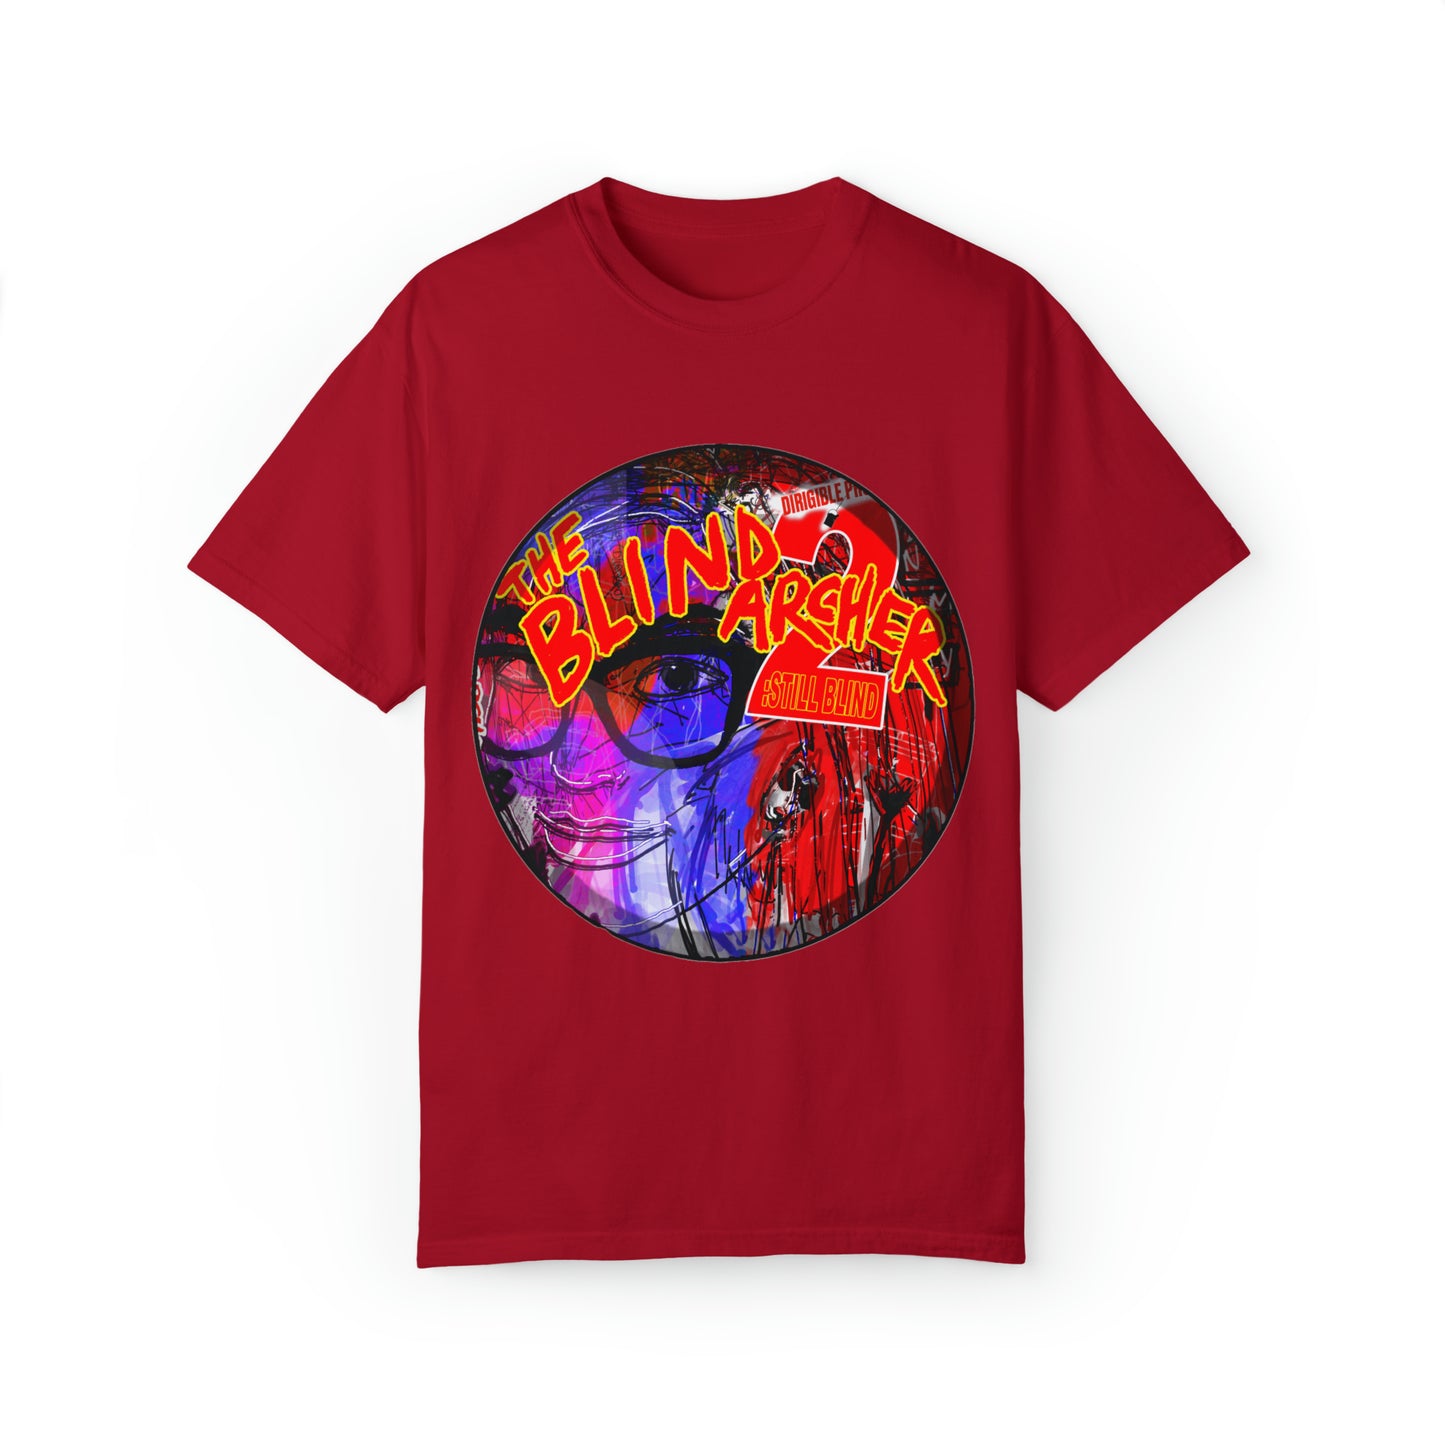 The Blind Archer Unisex Garment-Dyed T-shirt